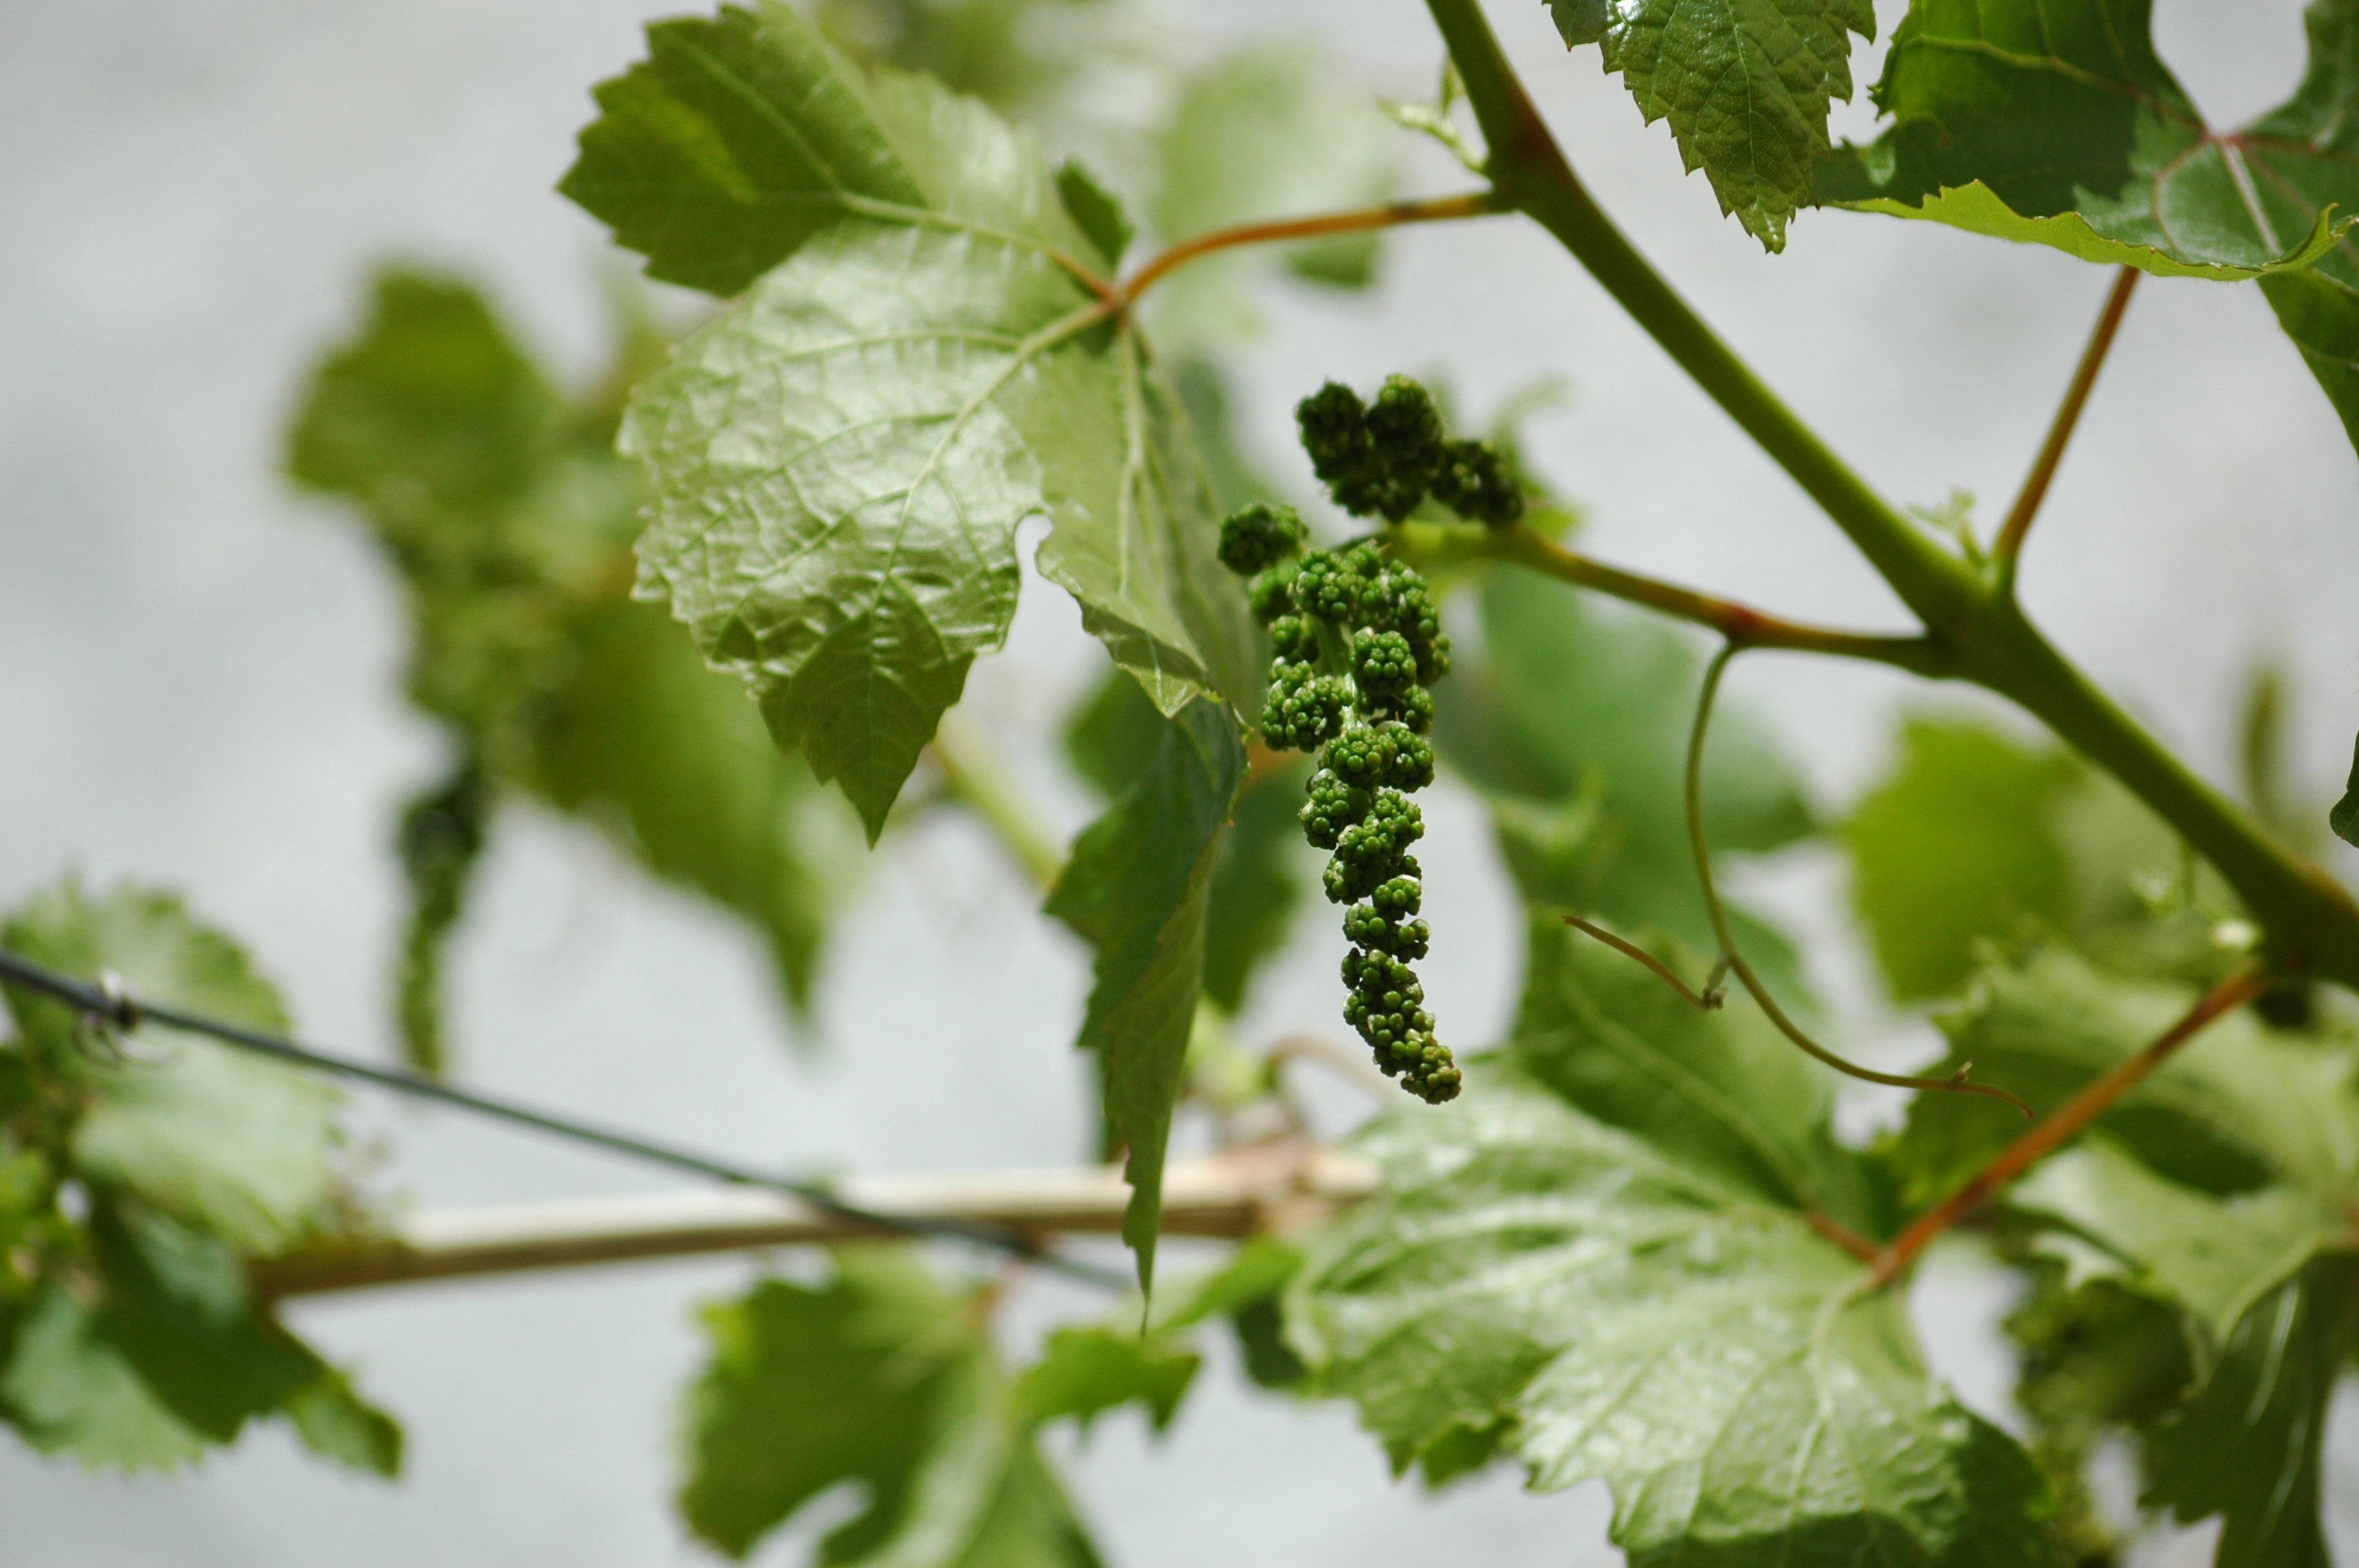 grape vine looks